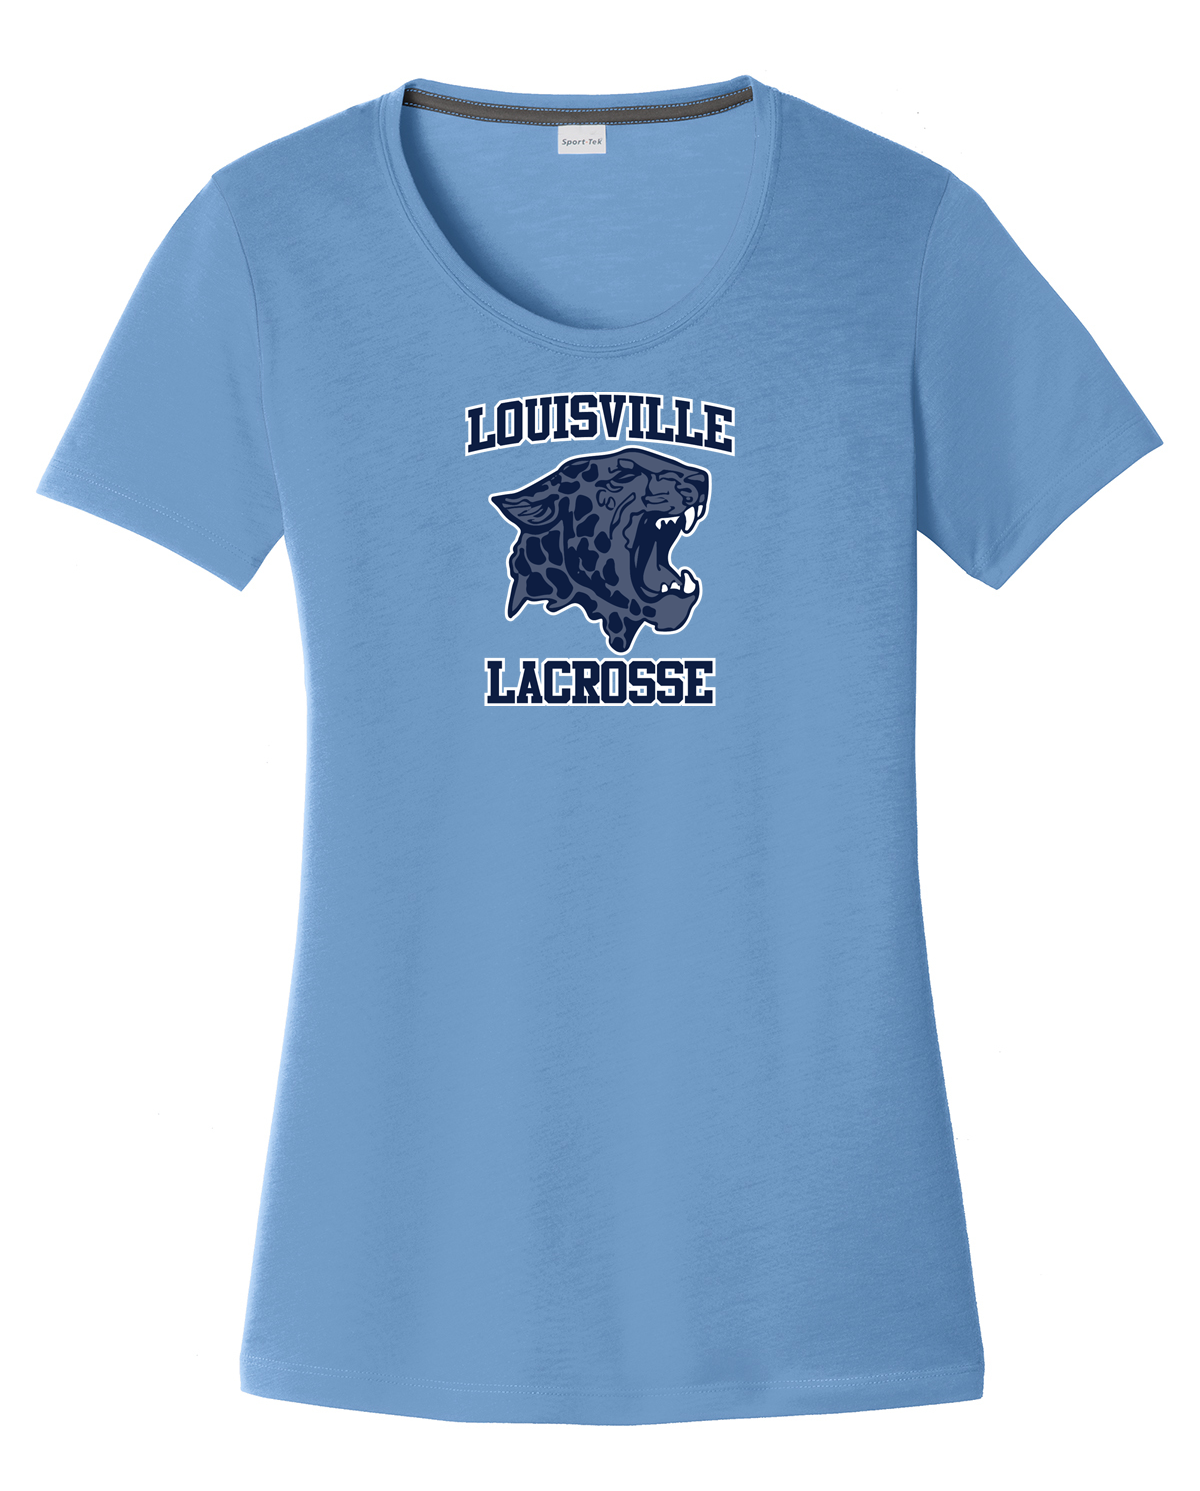 Louisville High School Lacrosse Women's CottonTouch Performance T-Shirt